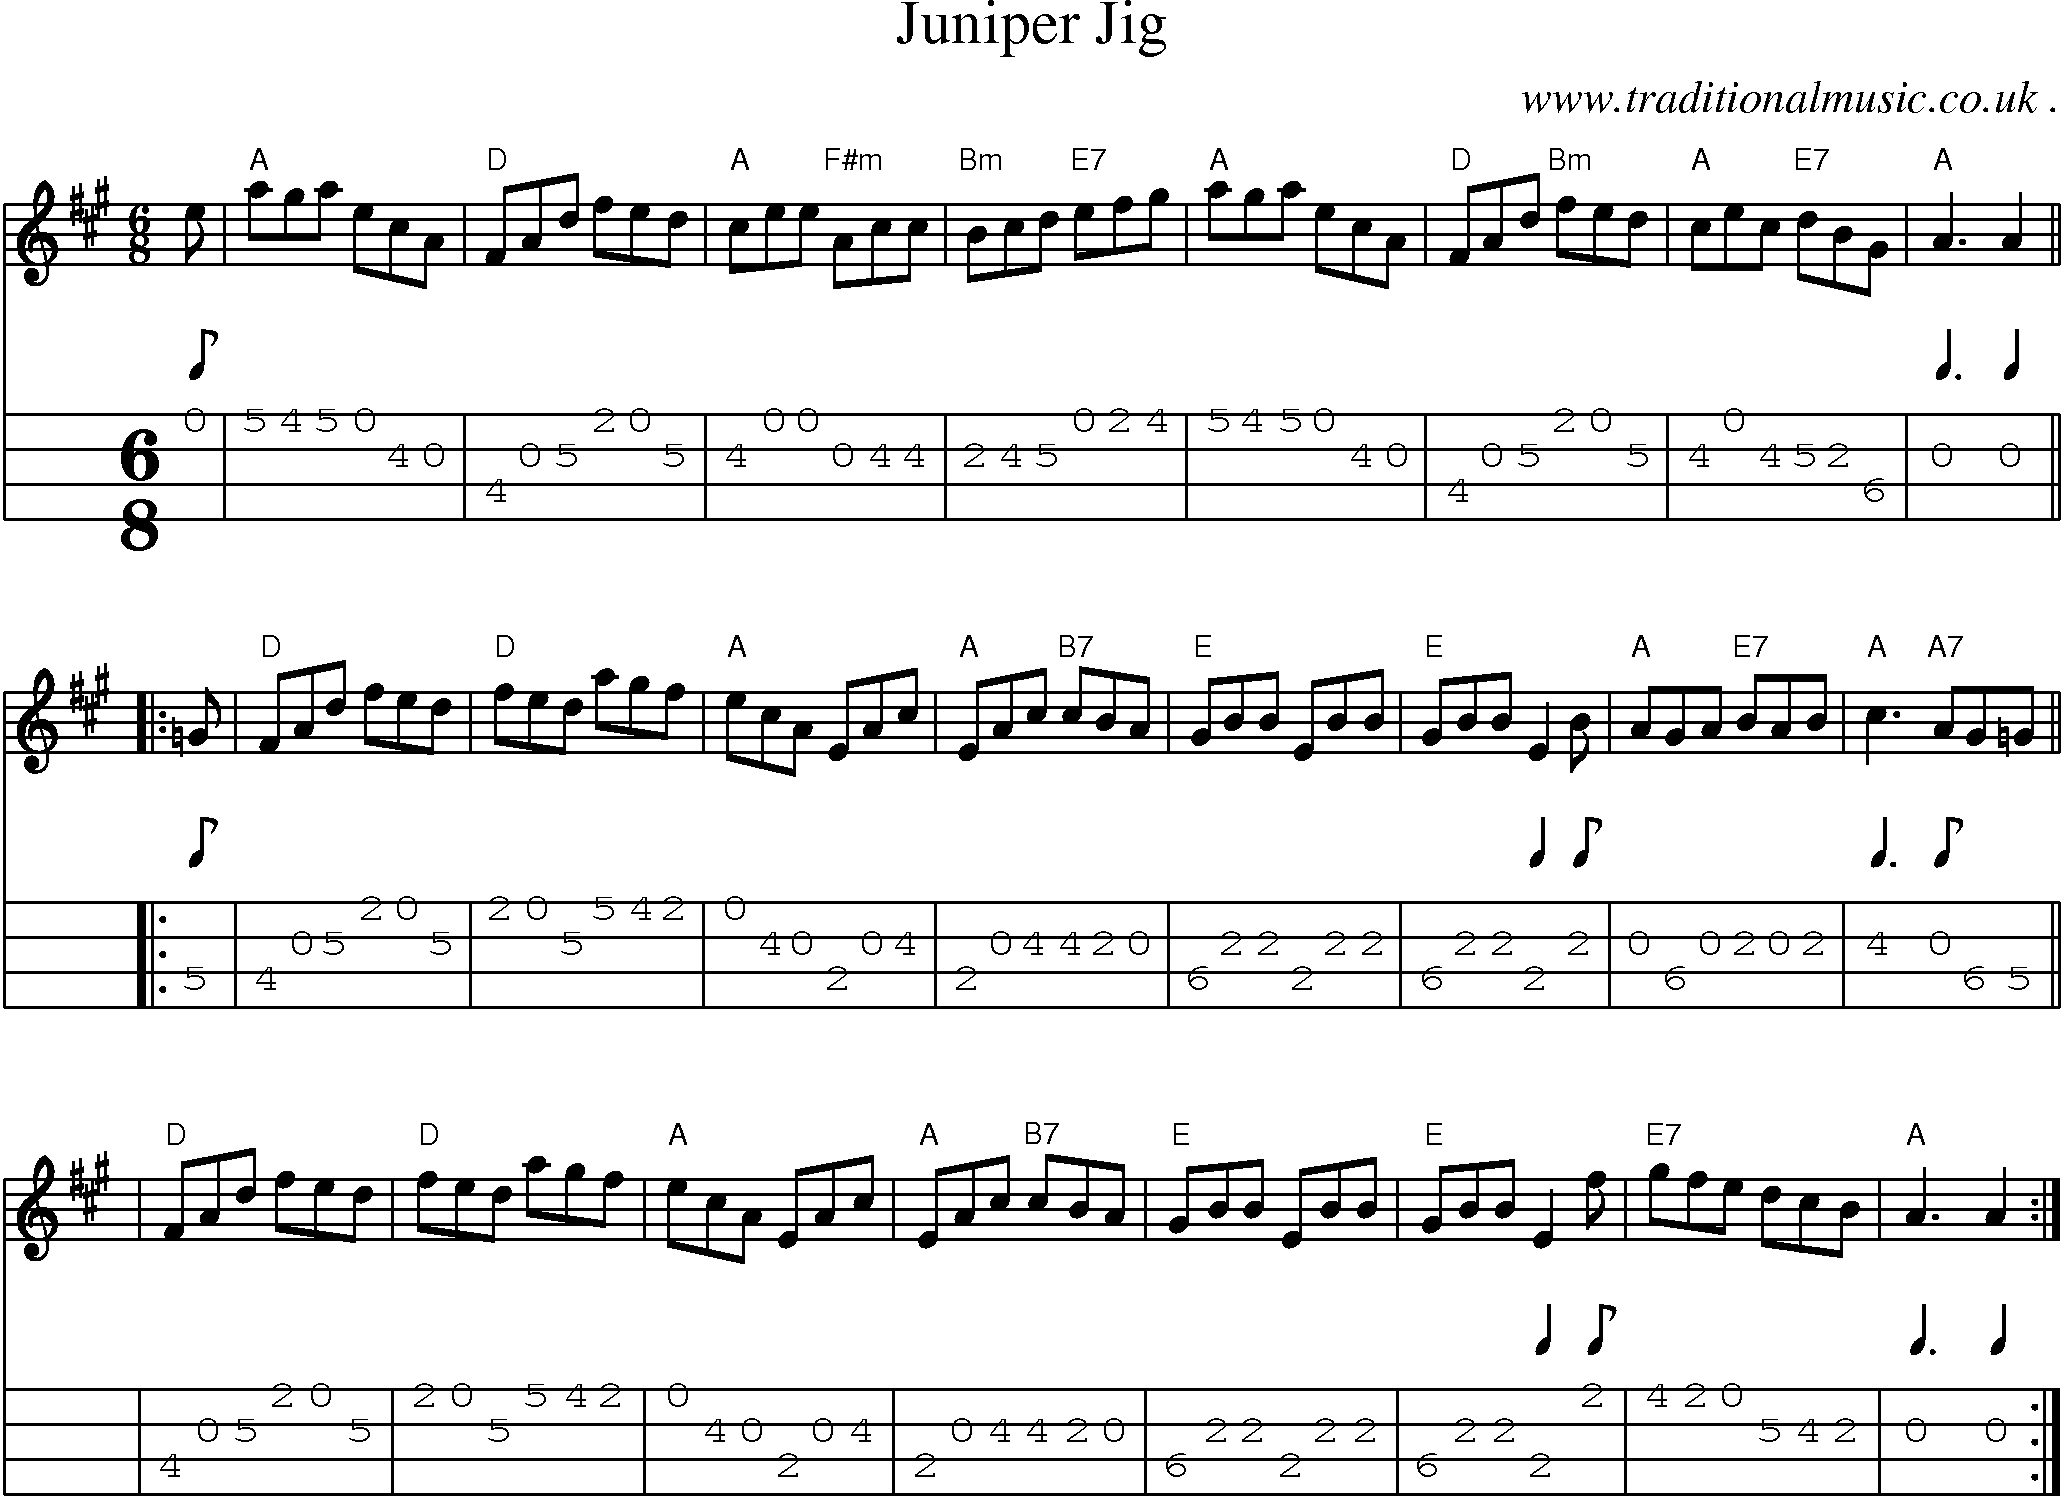 Sheet-music  score, Chords and Mandolin Tabs for Juniper Jig